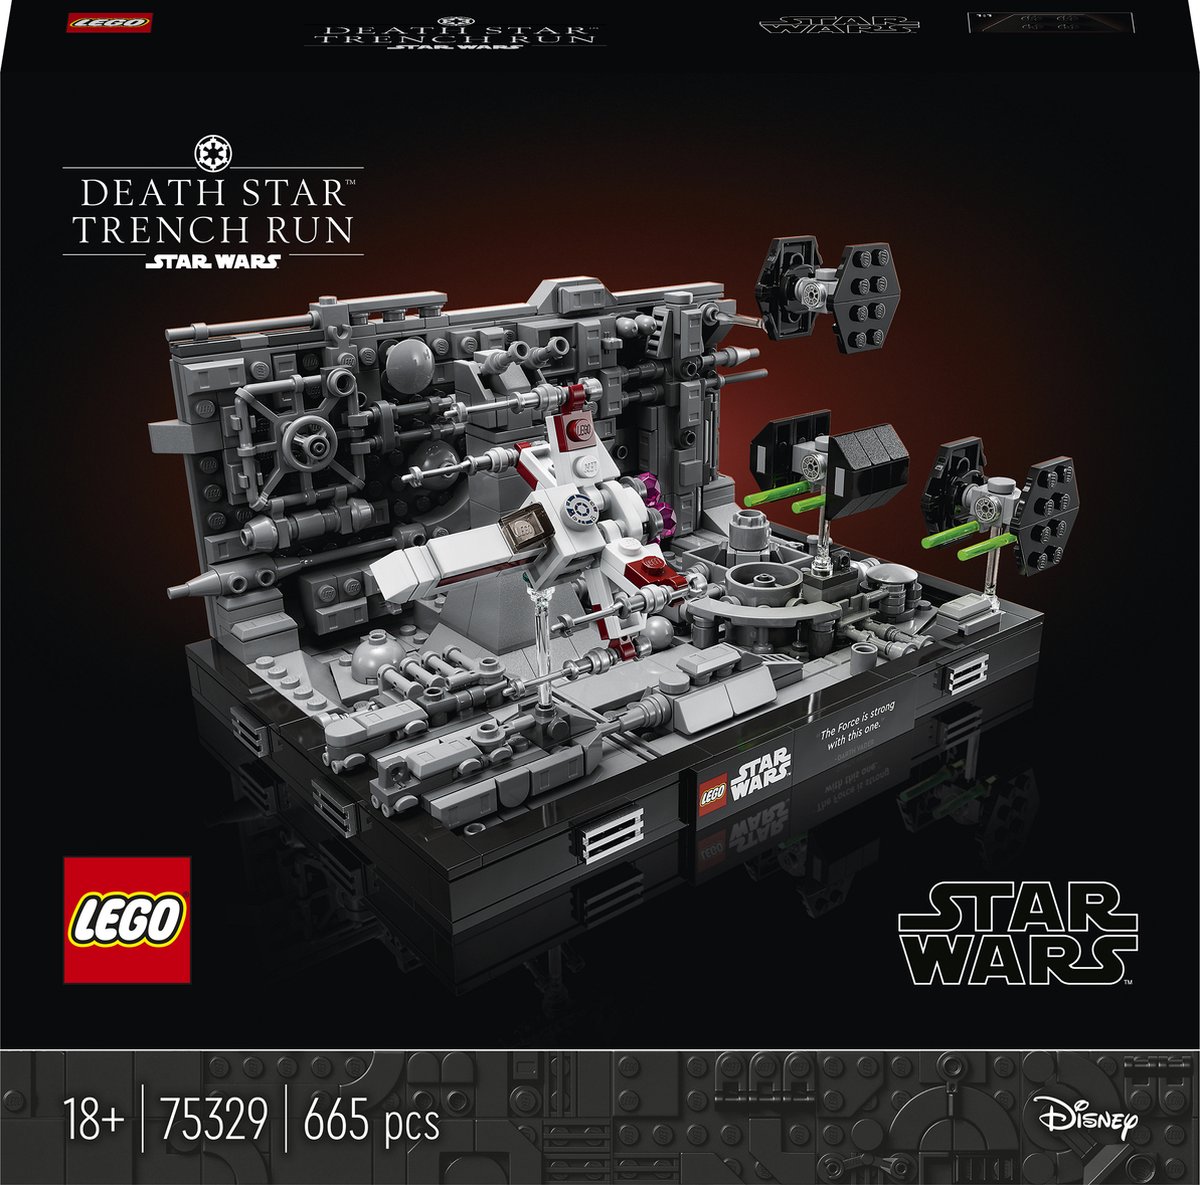 LEGO Star Wars Death Star Trench Run Diorama - 75329